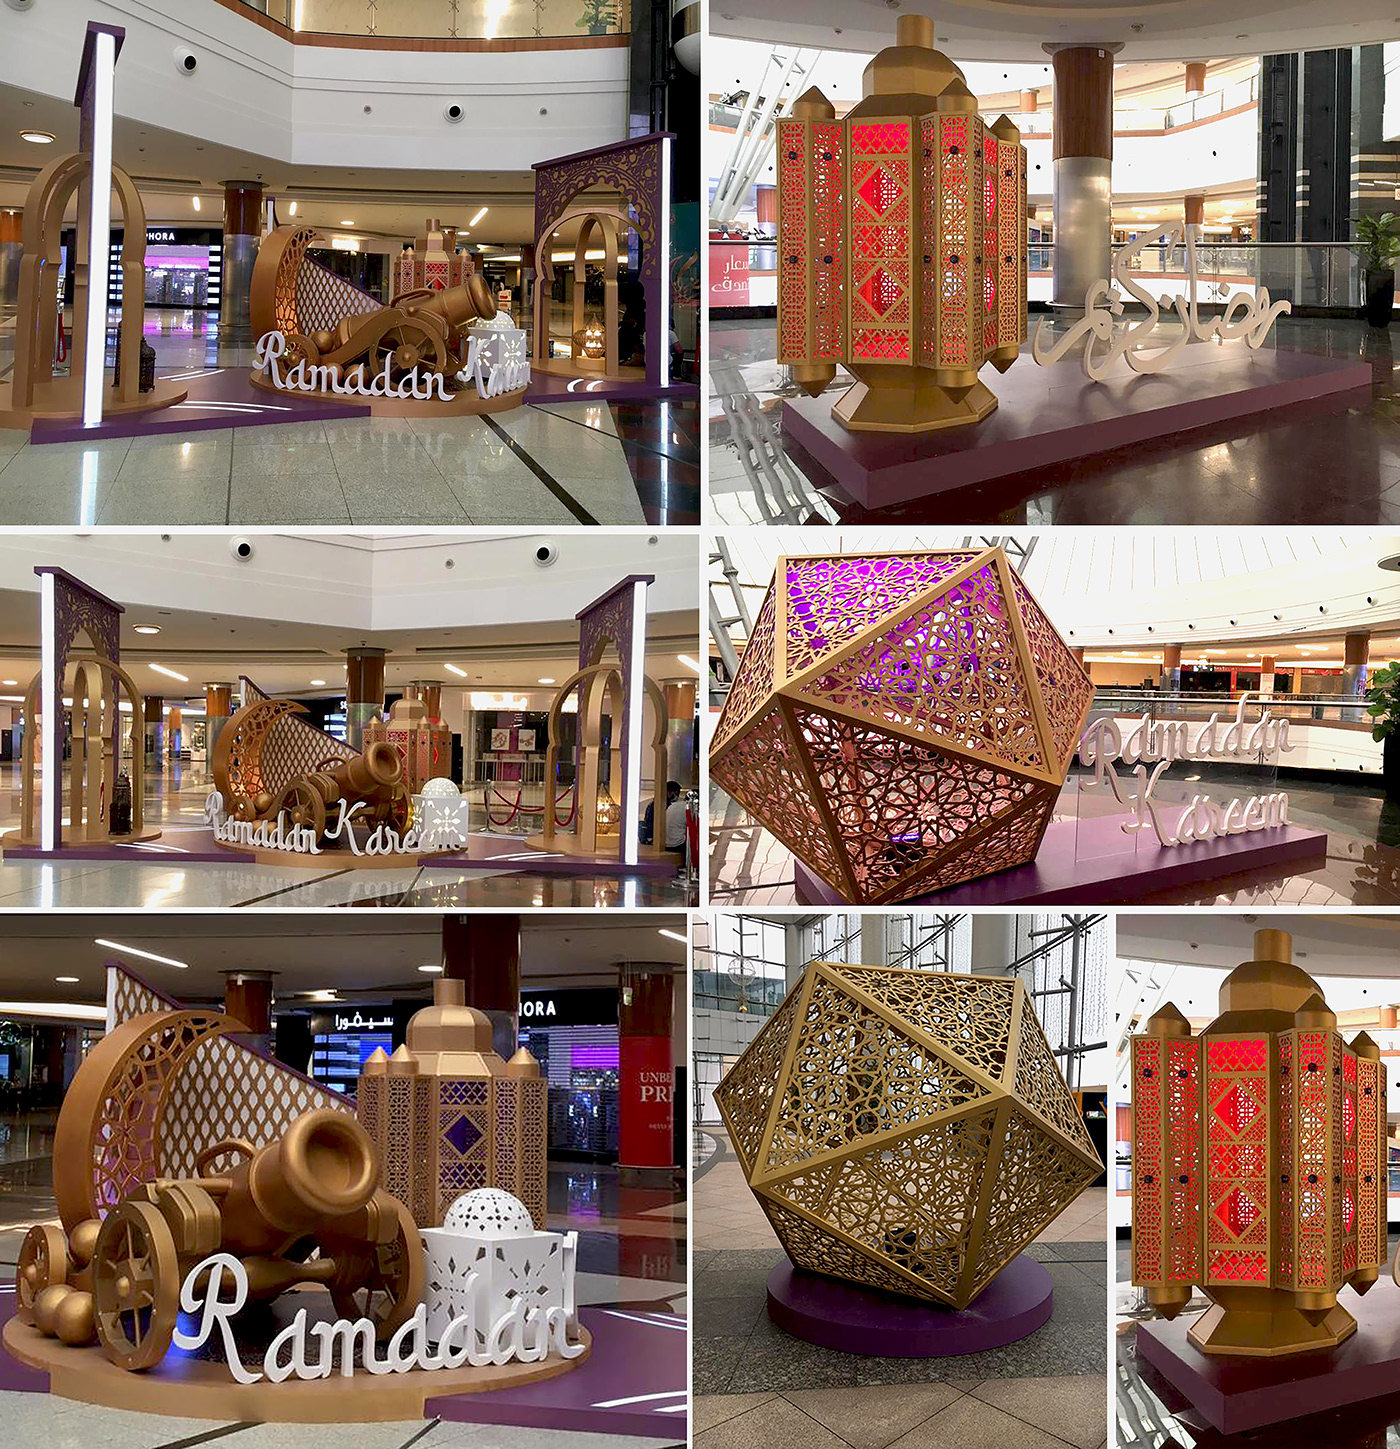   UAE 2021  Ramadan Decorations Abu Dhabi Dalma Mall new ramadan Shimaelfeky